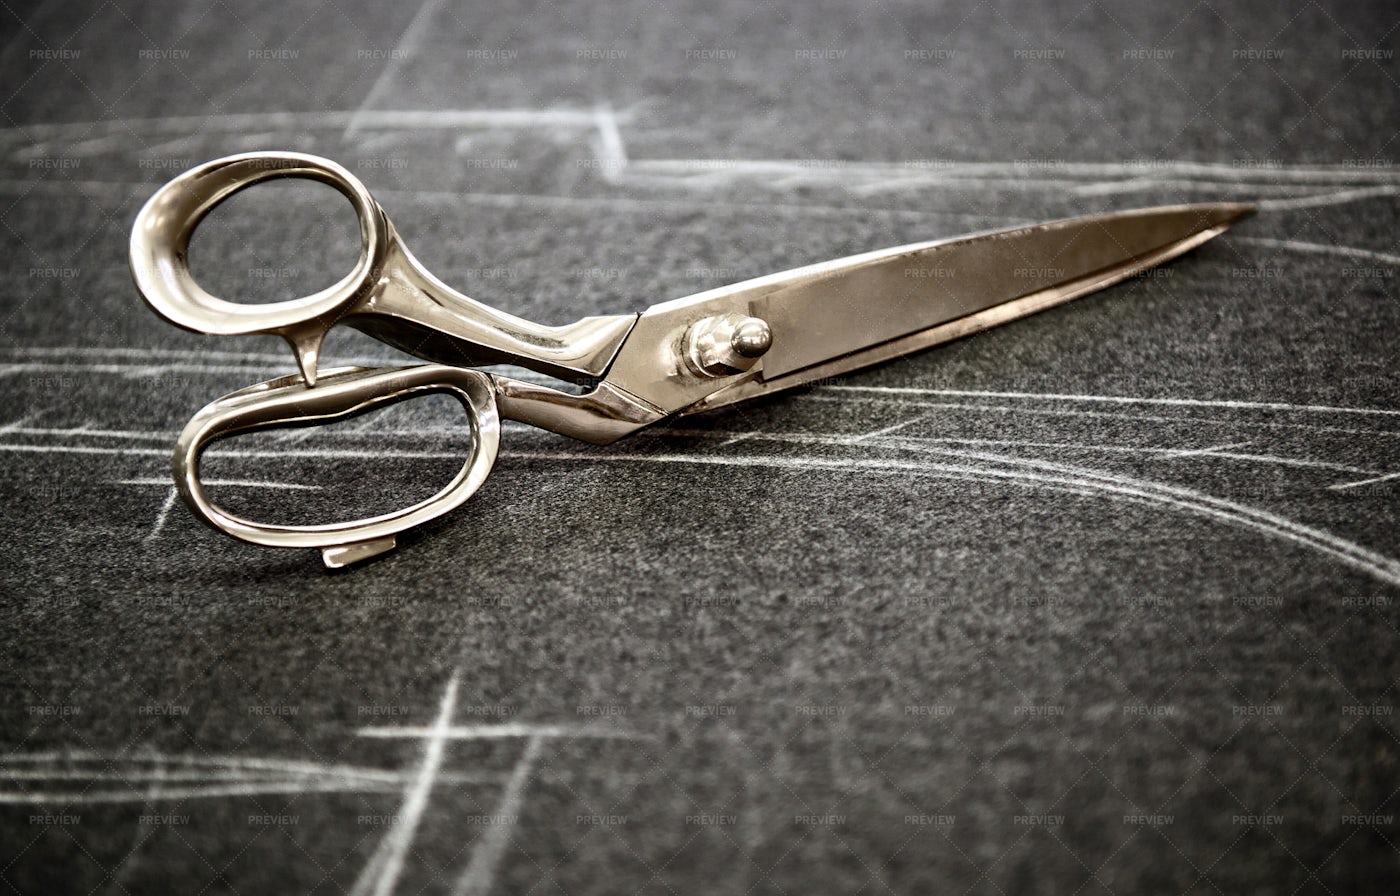 Tailors Scissors On Fabric: Stock Photos